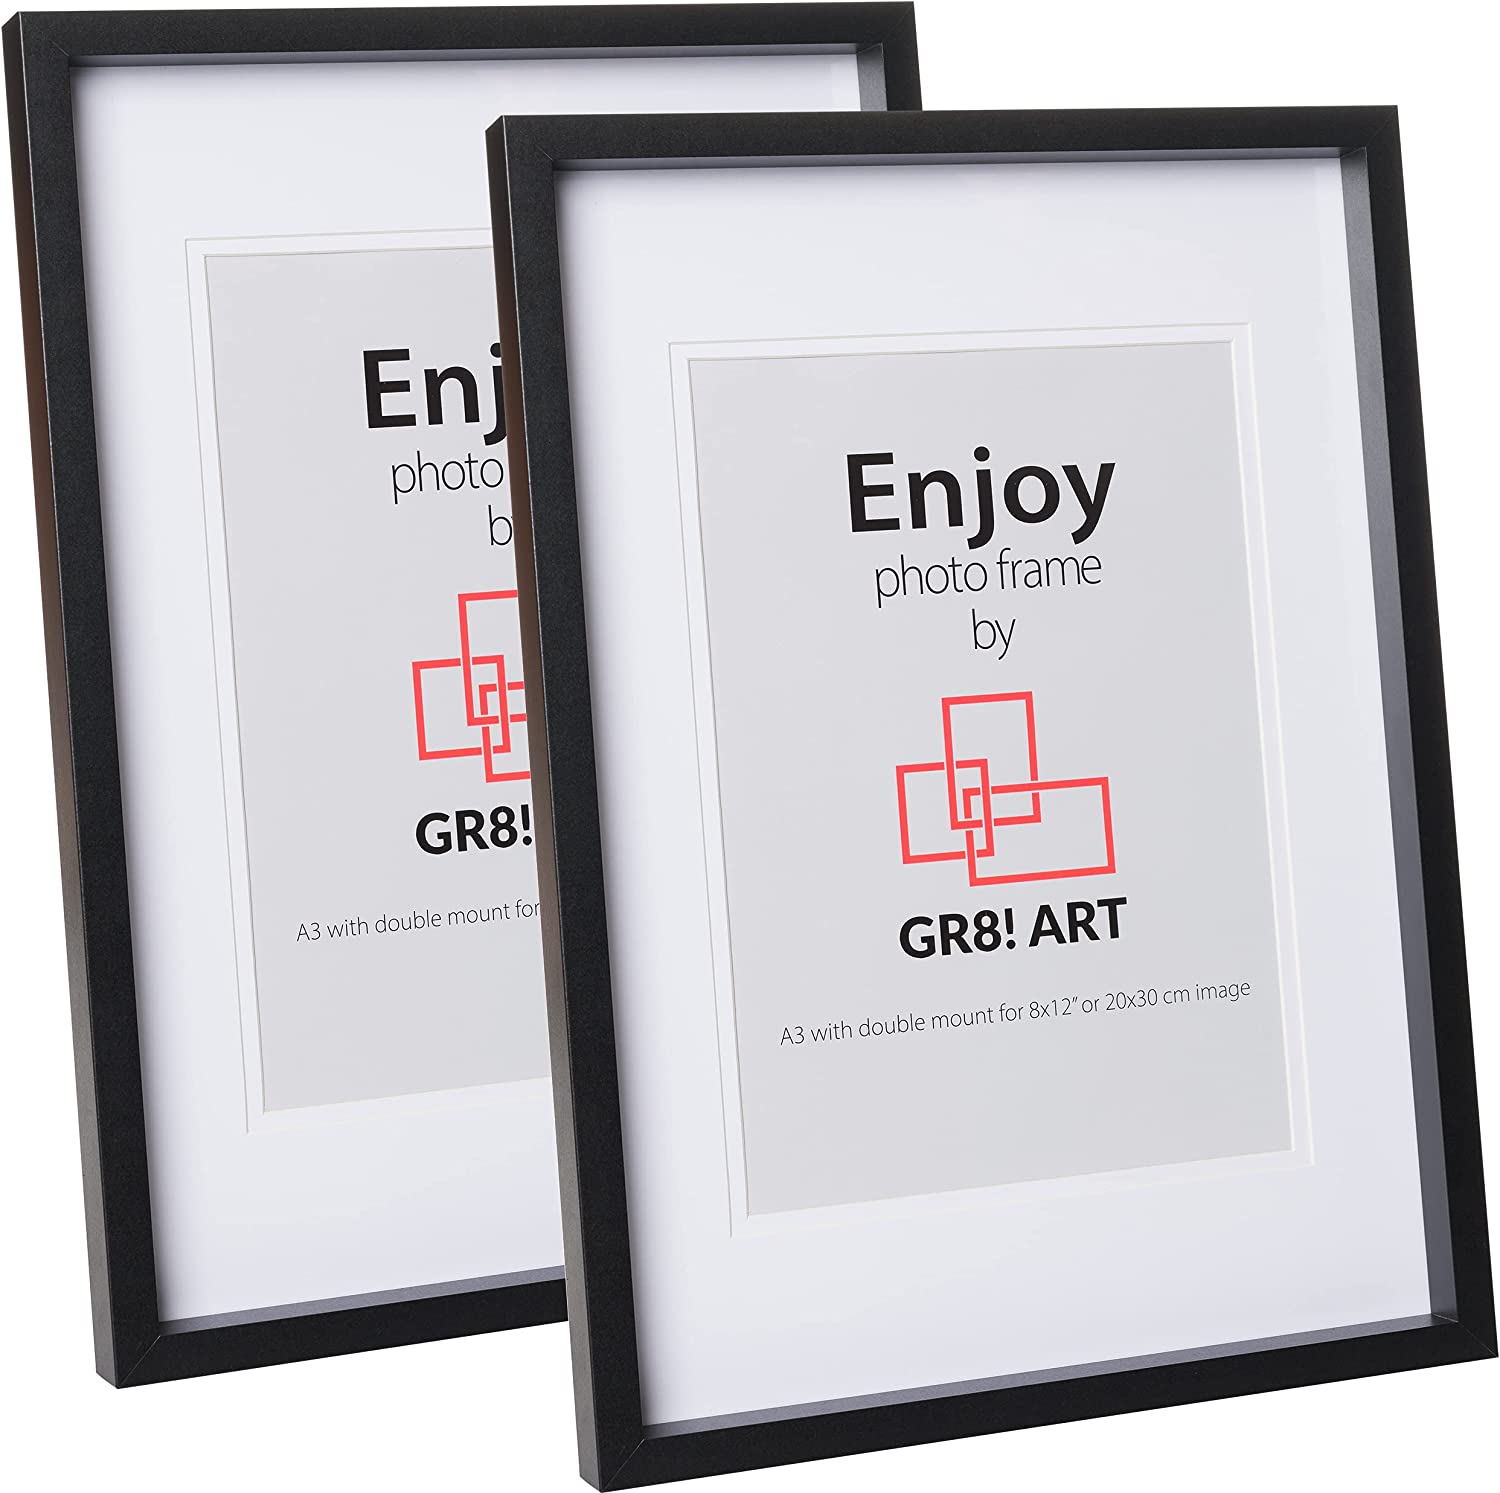 Gr8! Art Enjoy Black Photo Frame 2 Pack 8 x 12 Inch 20 x 30cm RRP £29.99 CLEARANCE XL £4.99